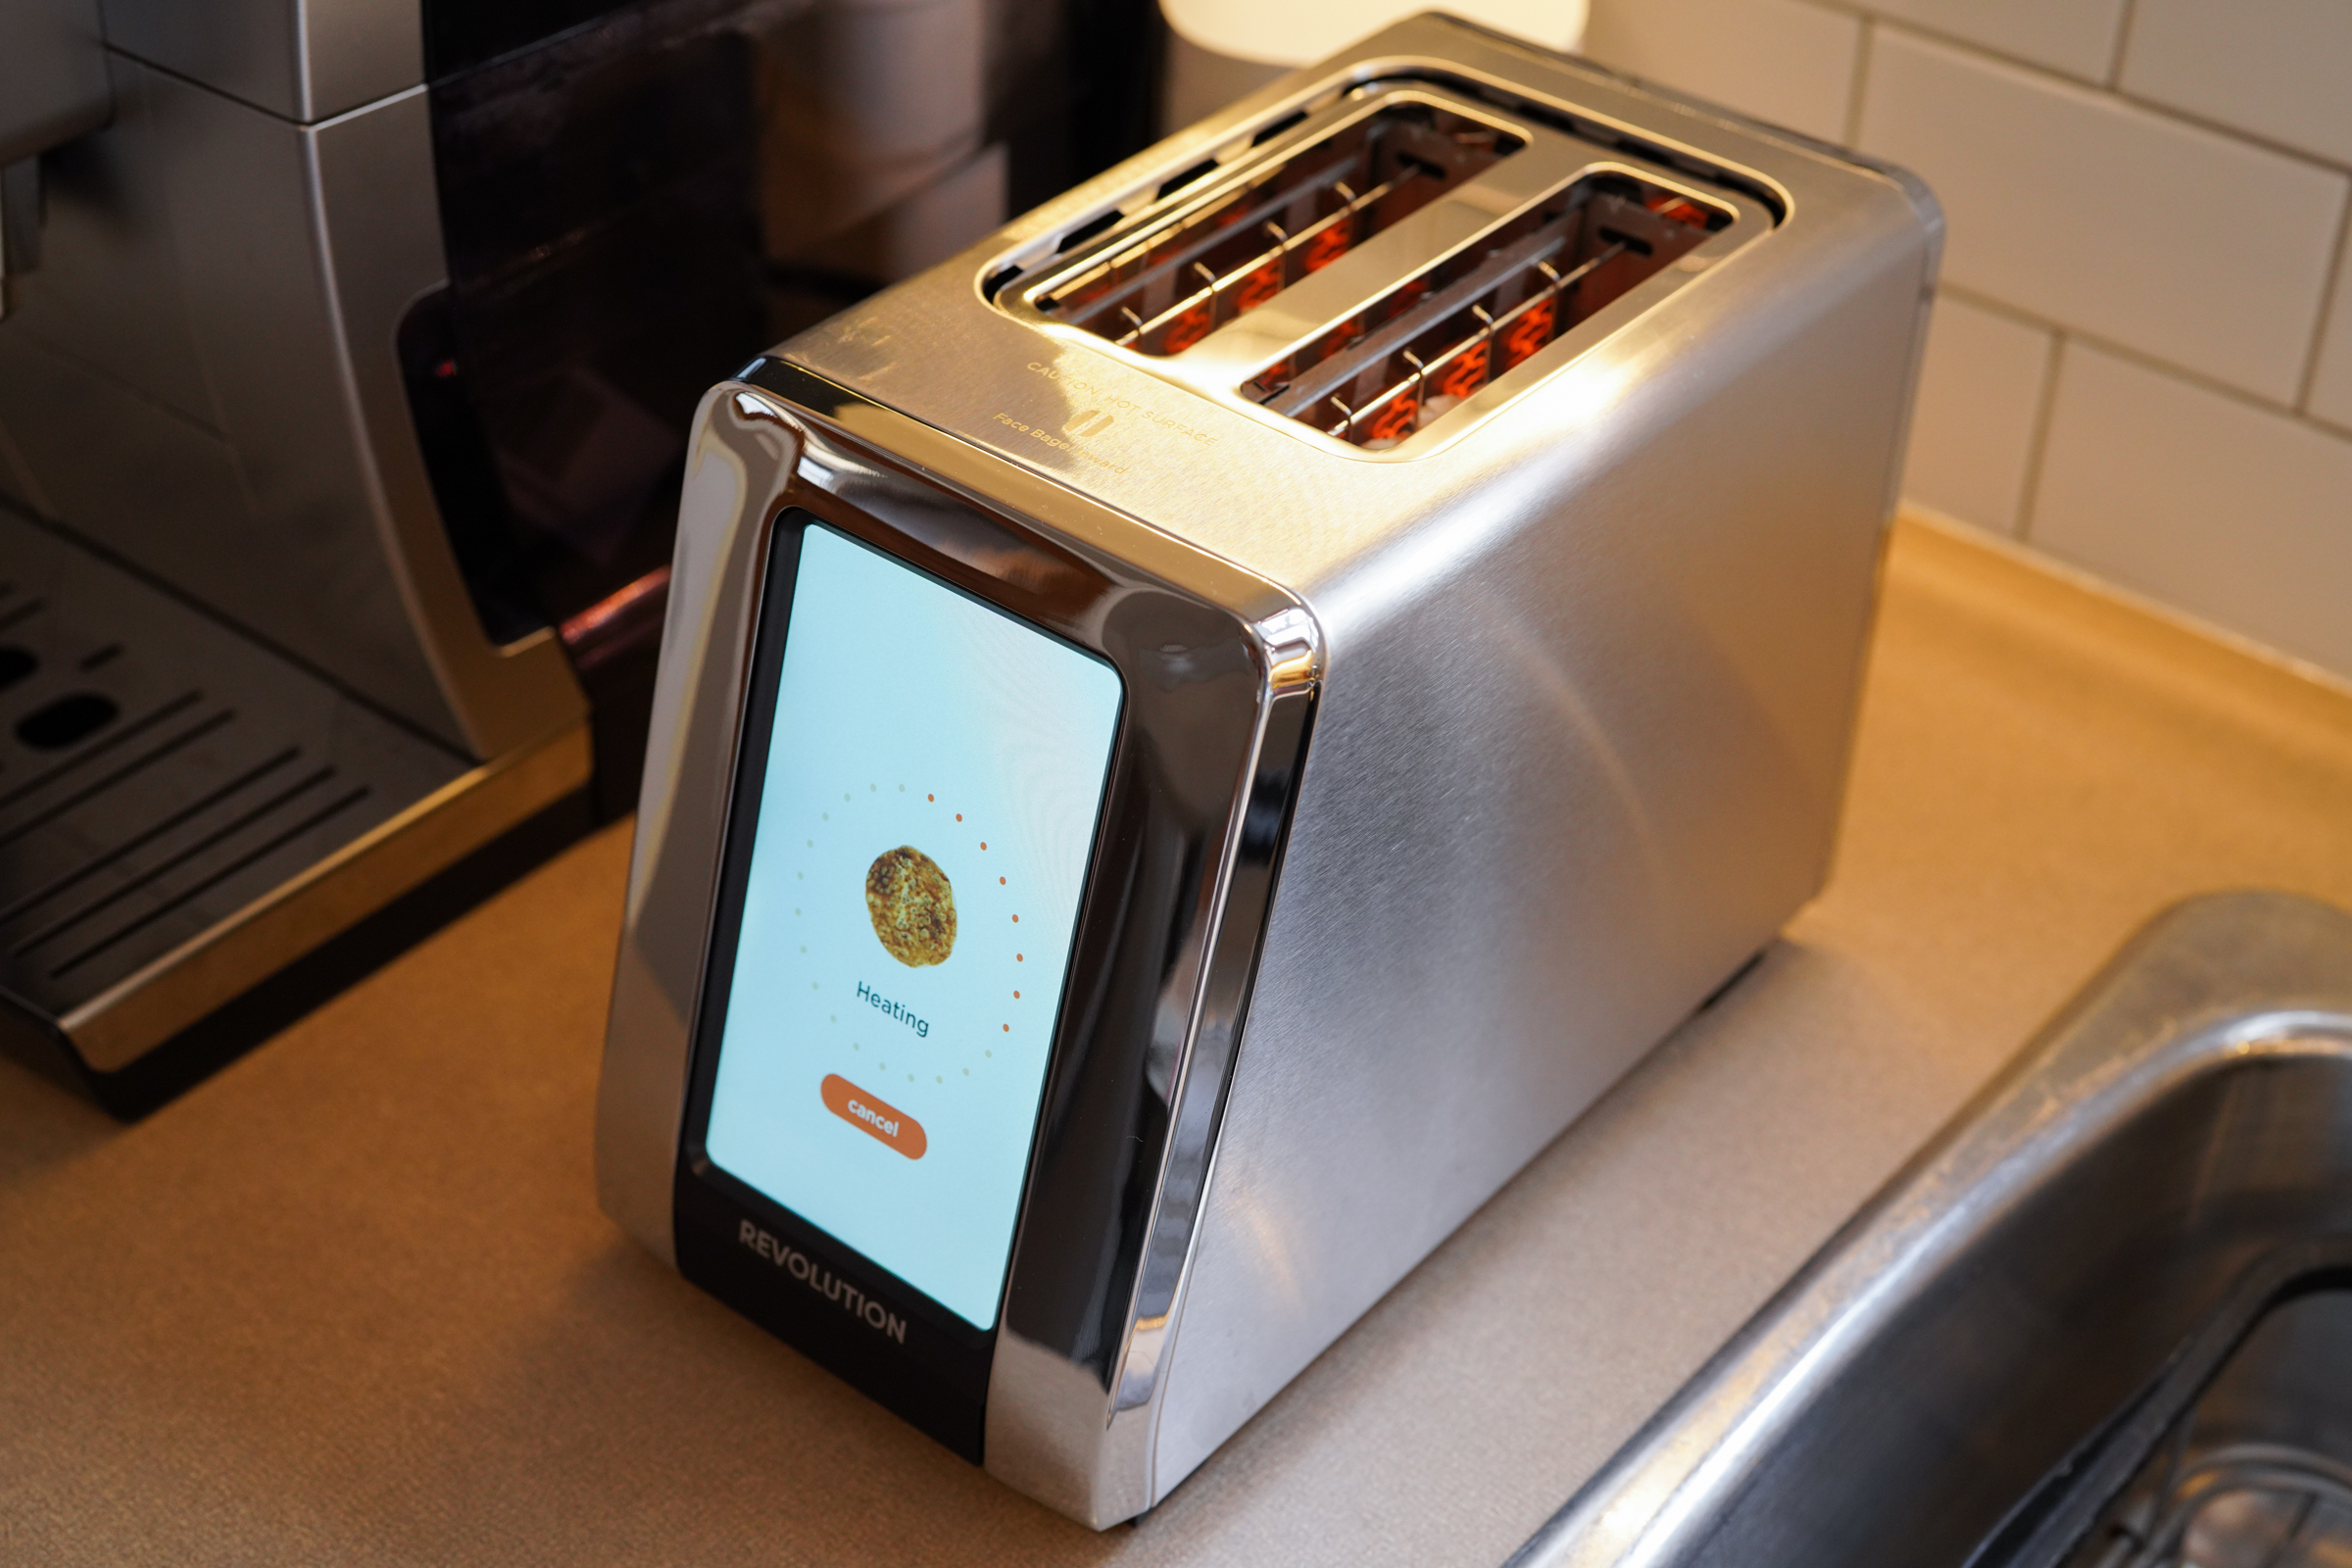 https://techcrunch.com/wp-content/uploads/2020/11/Revolution-R180-Smart-Toaster-3.jpg